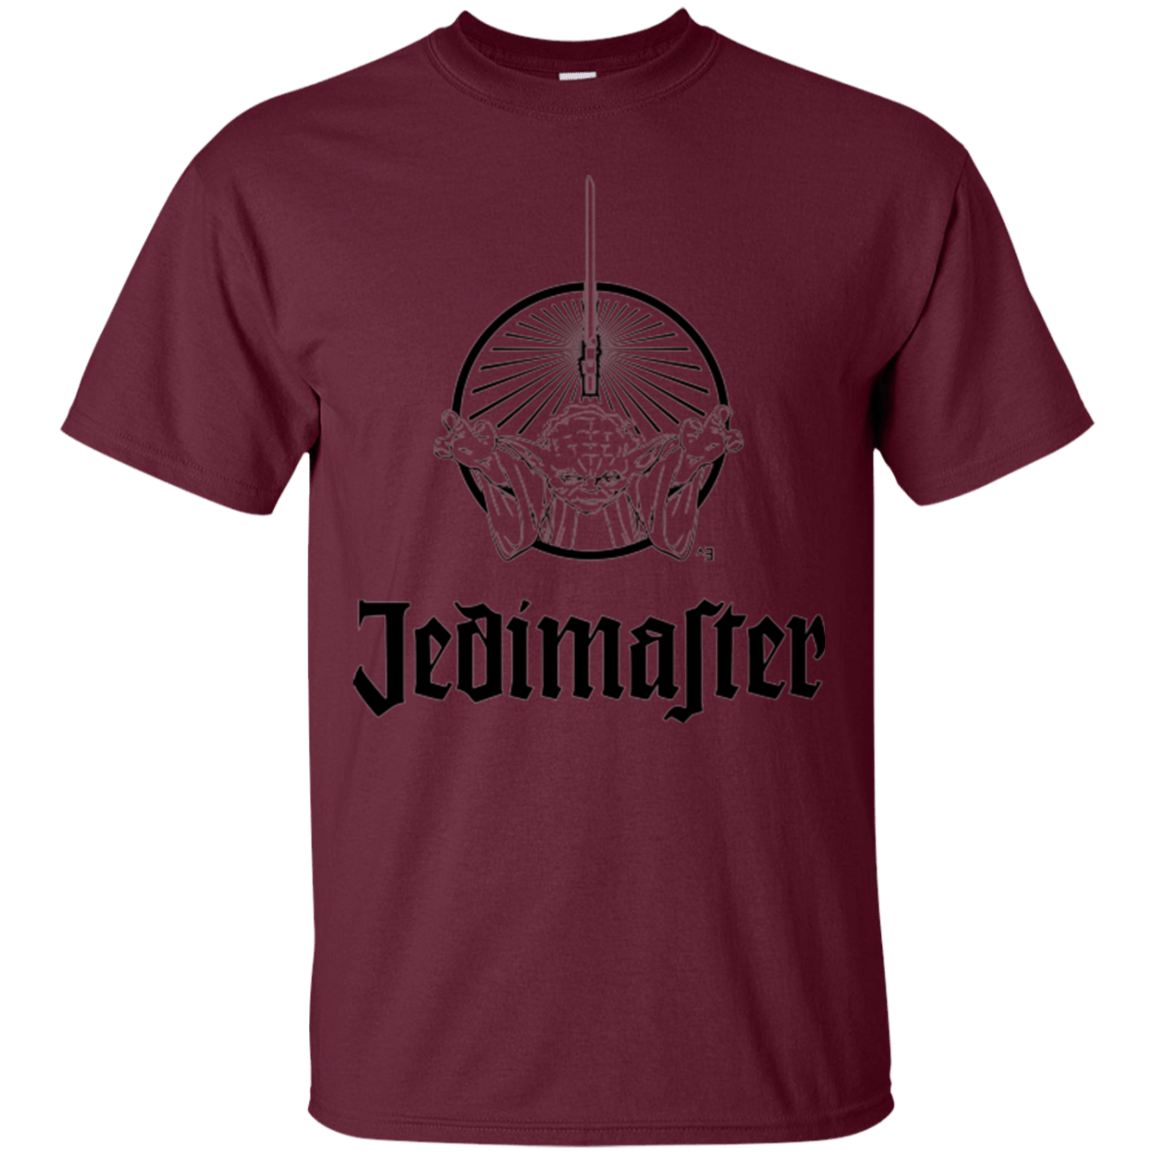 T-Shirts Maroon / S Jedimaster T-Shirt